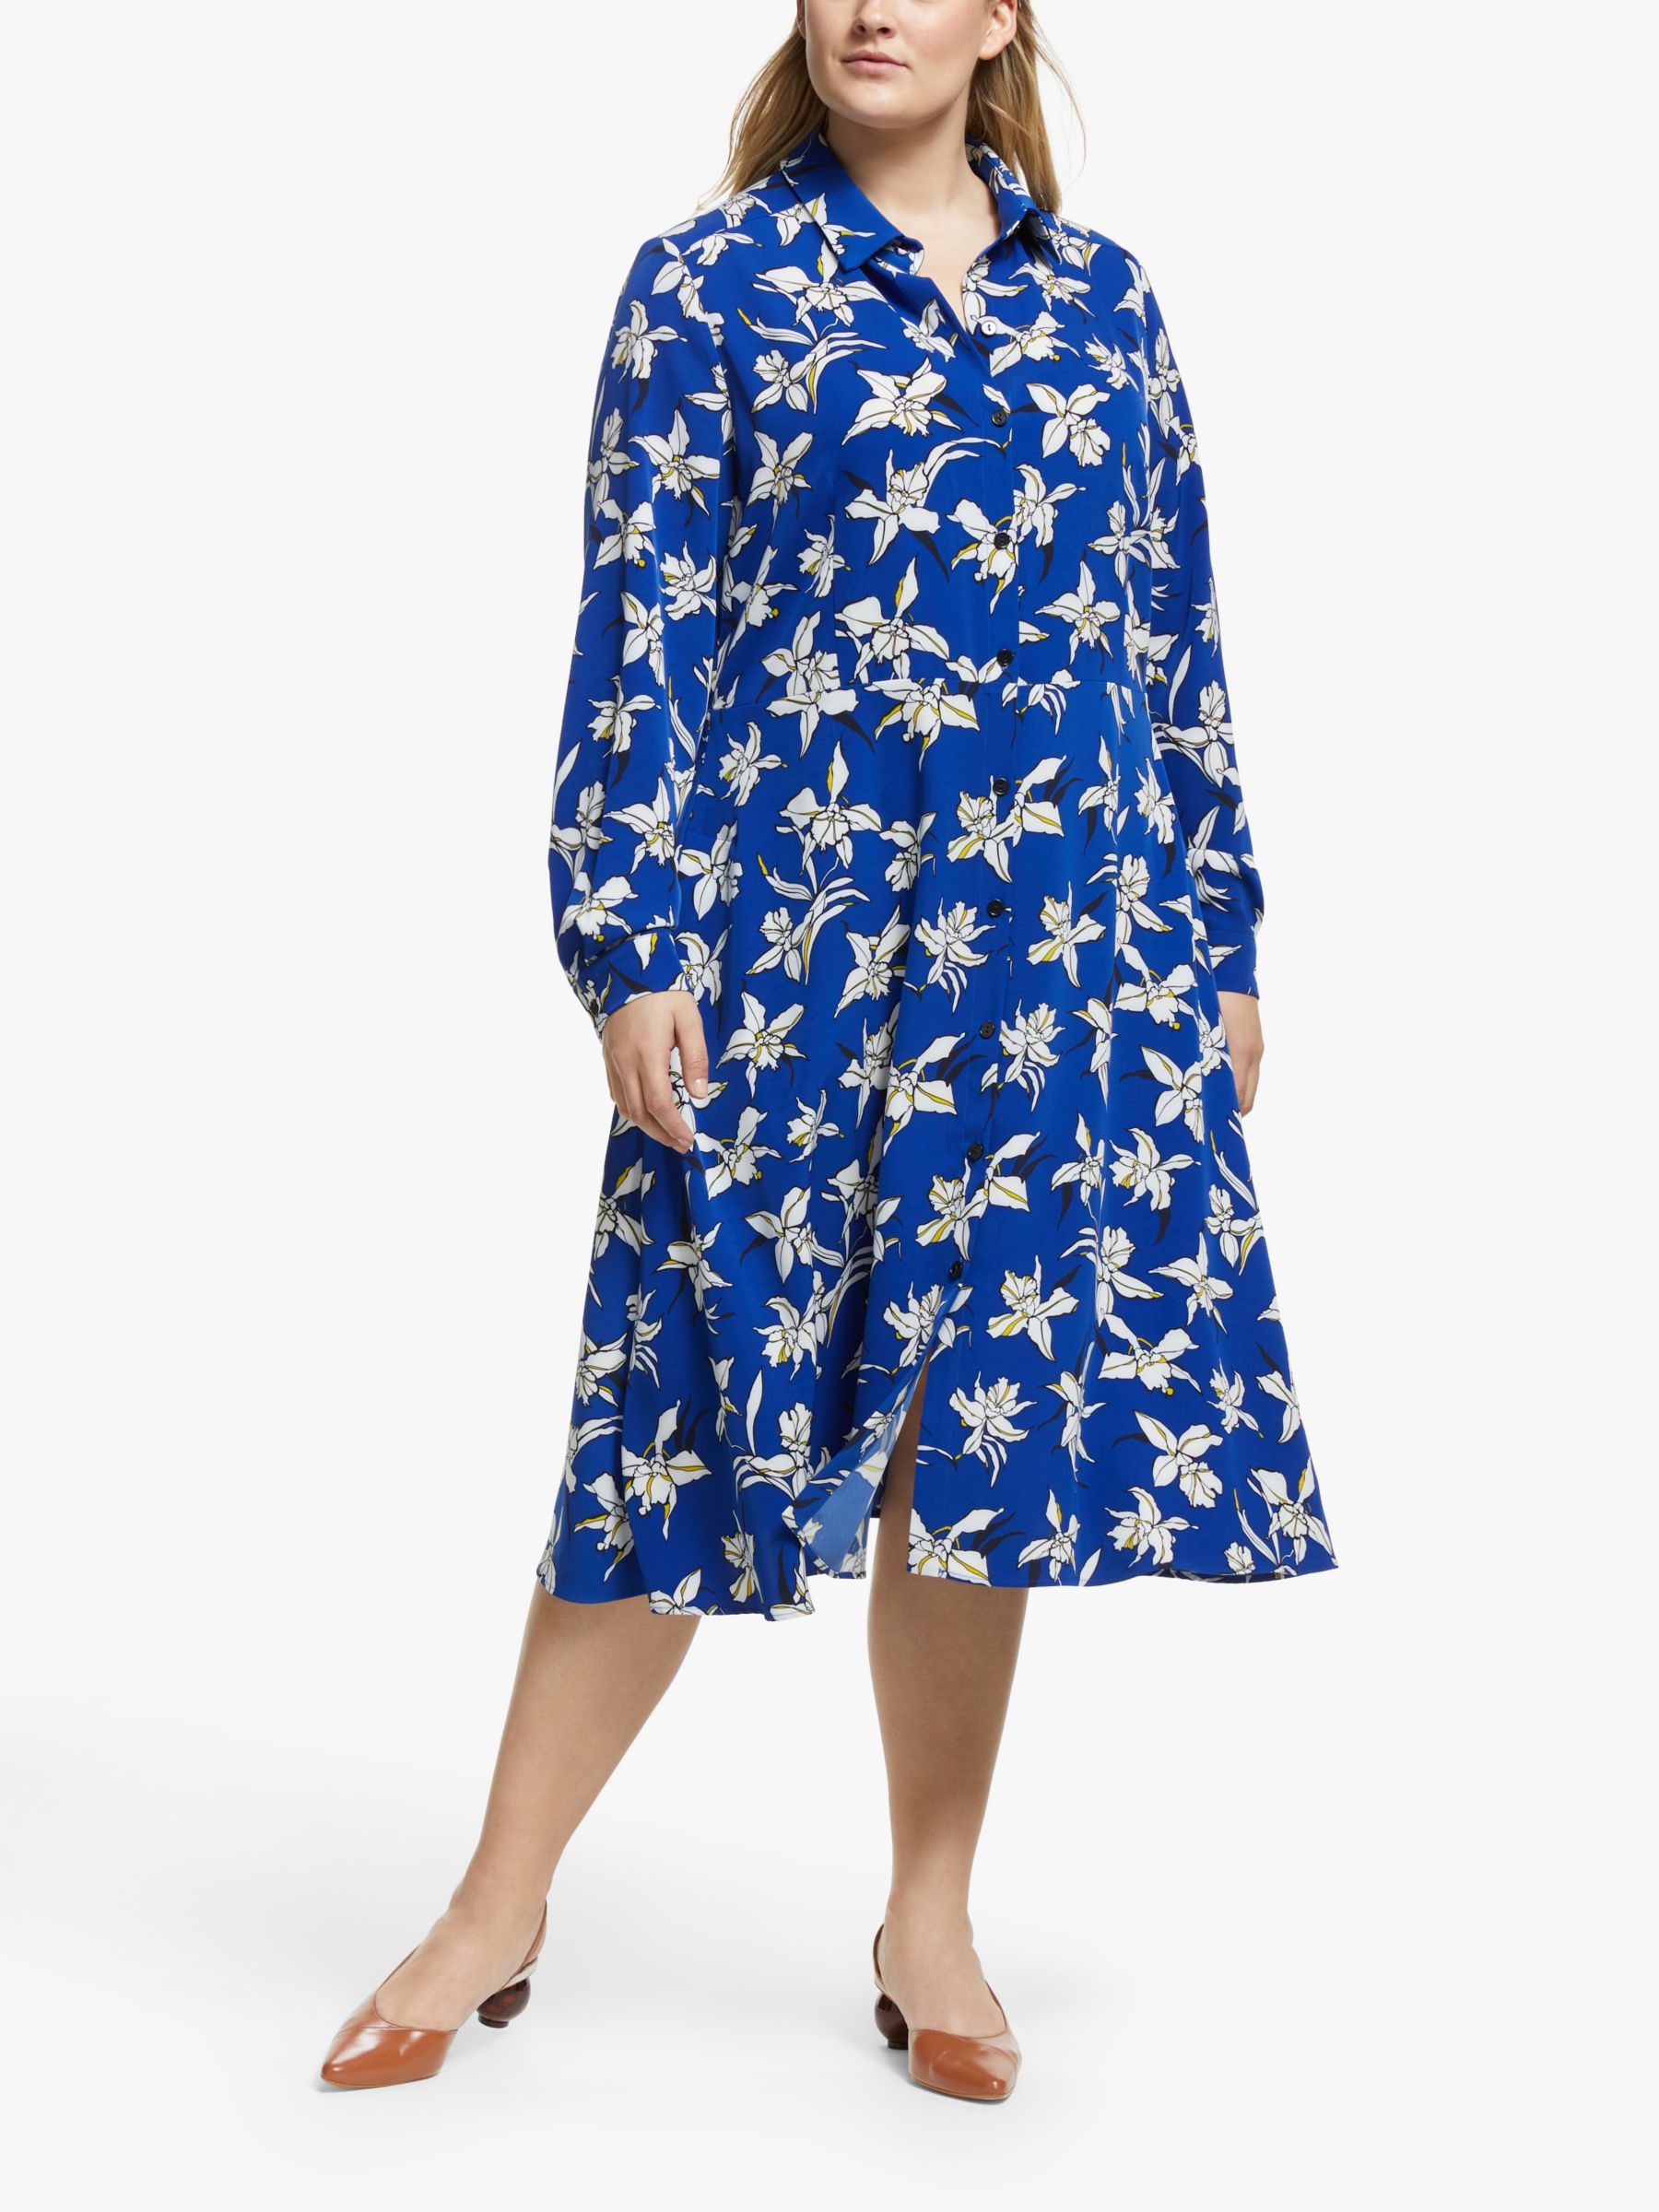 Persona by Marina Rinaldi Dire Floral Midi Dress, Blue